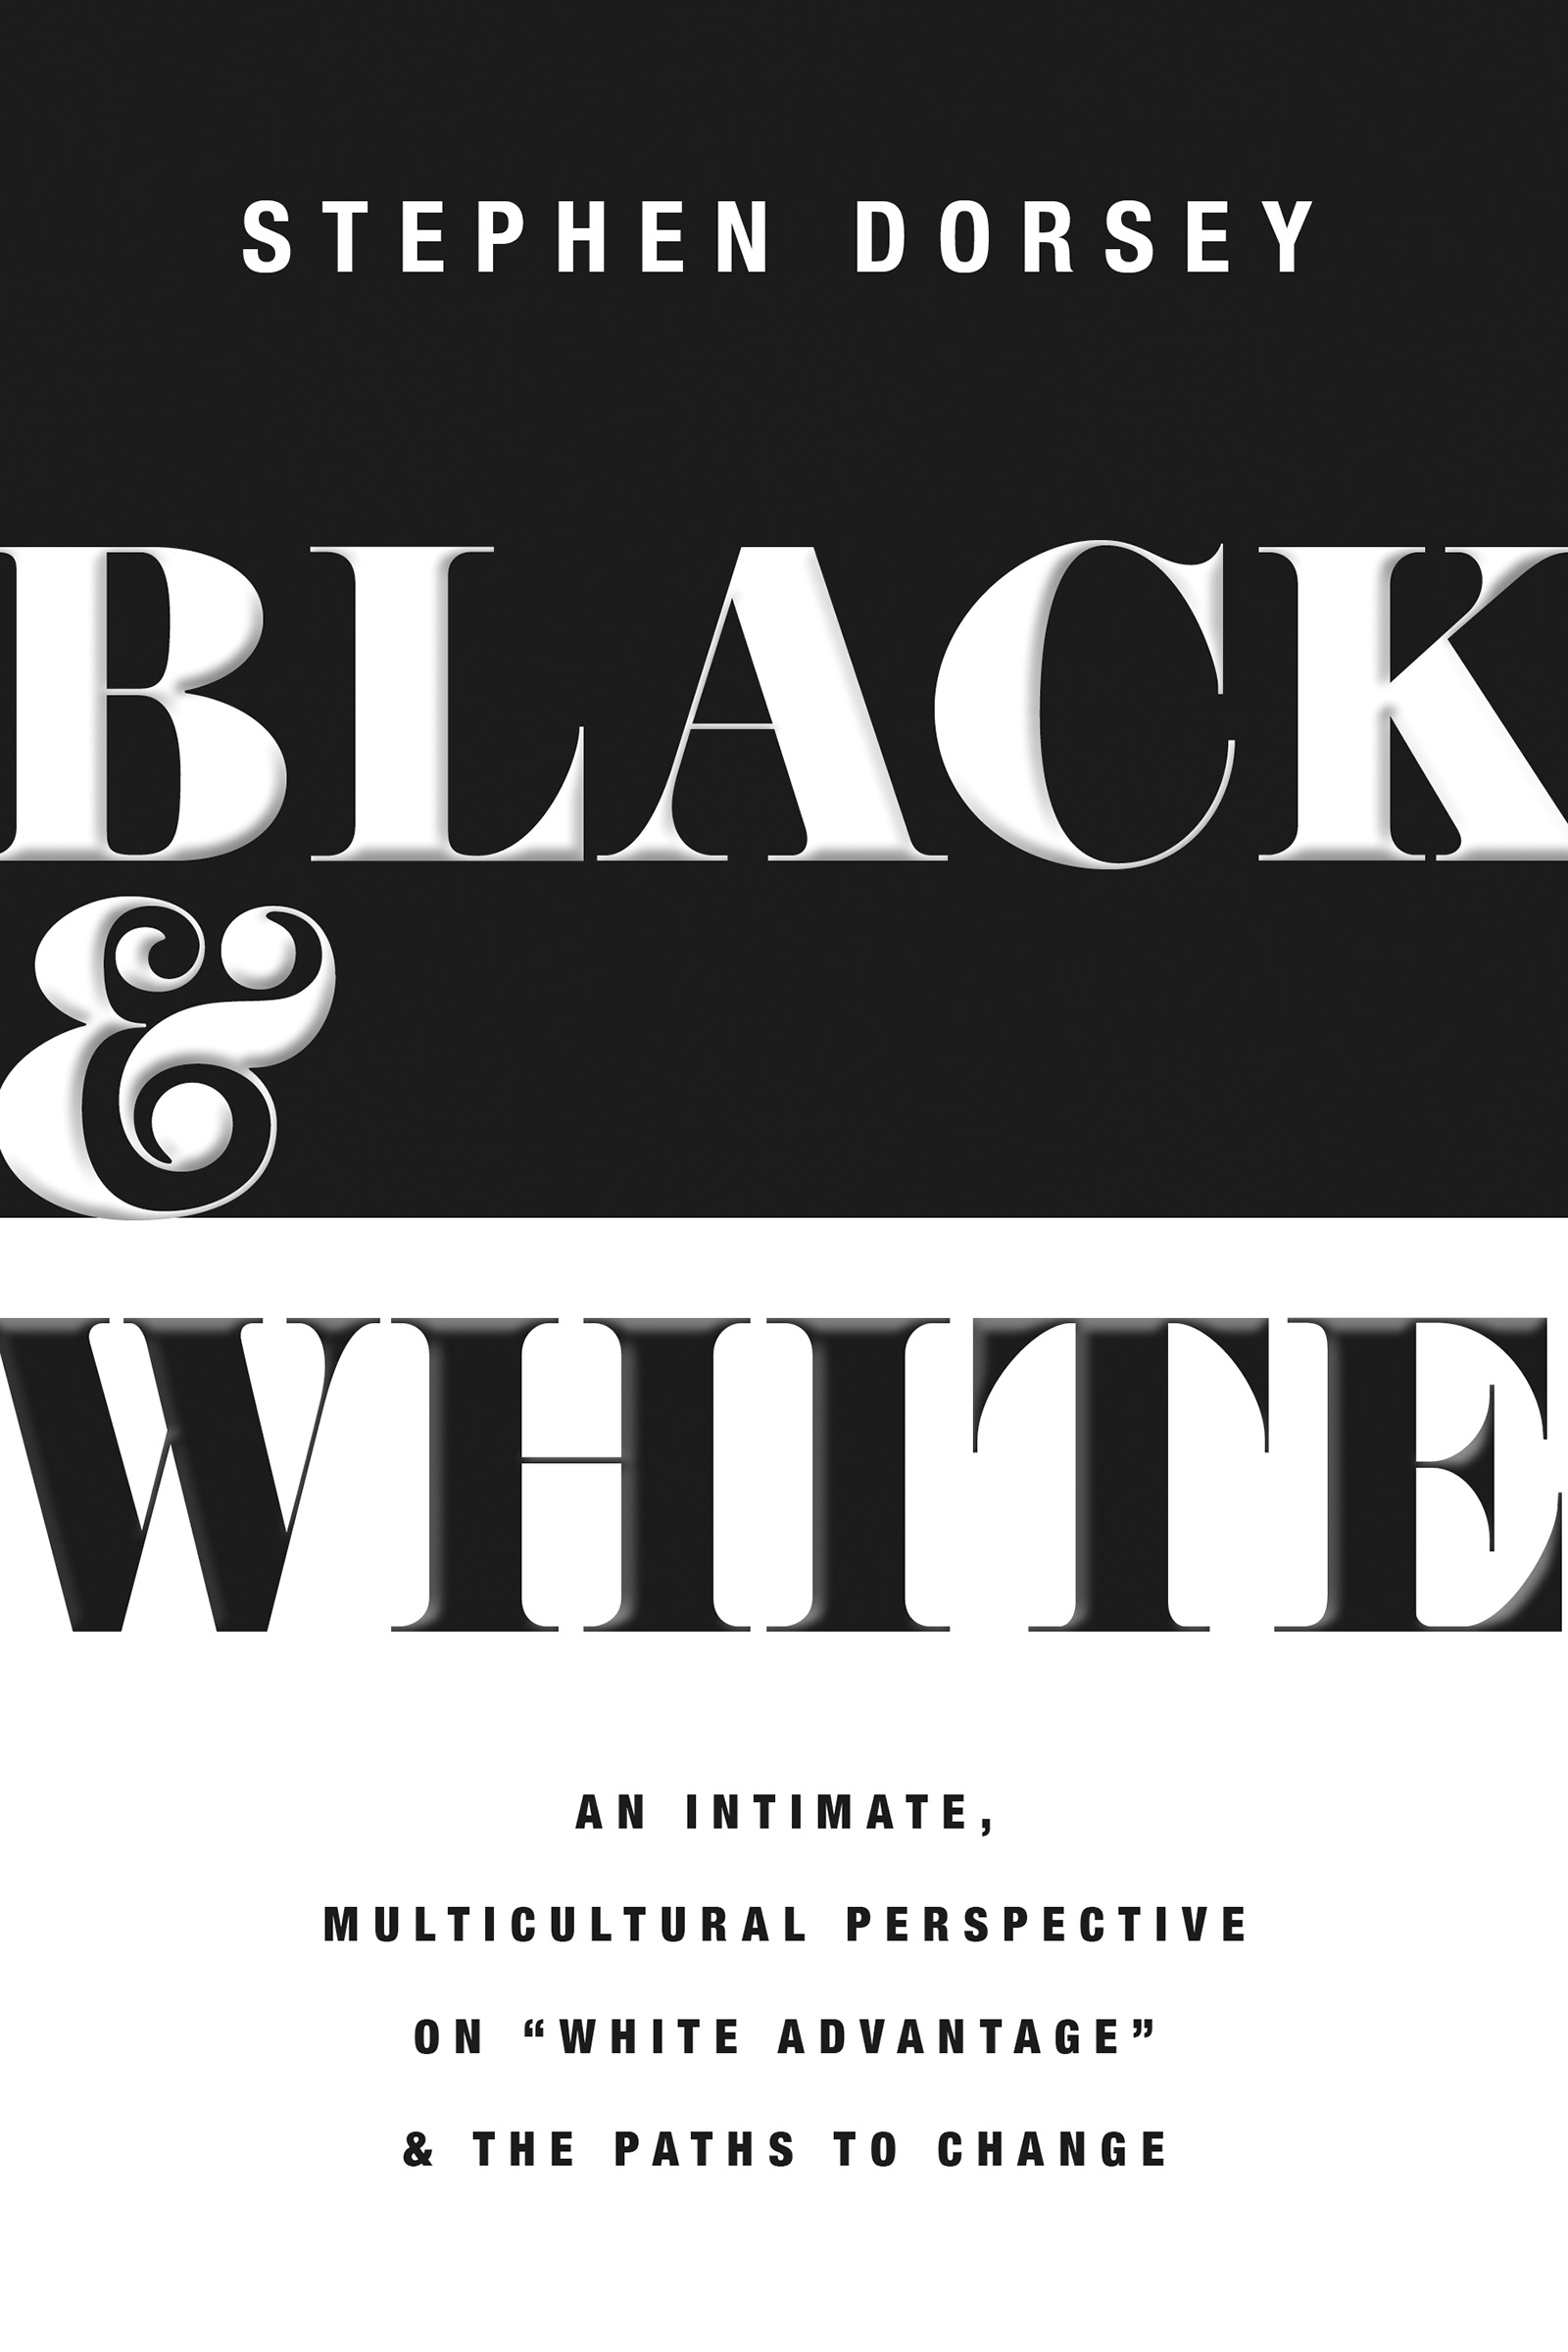 Stephen Dorsey's Black and White book cover